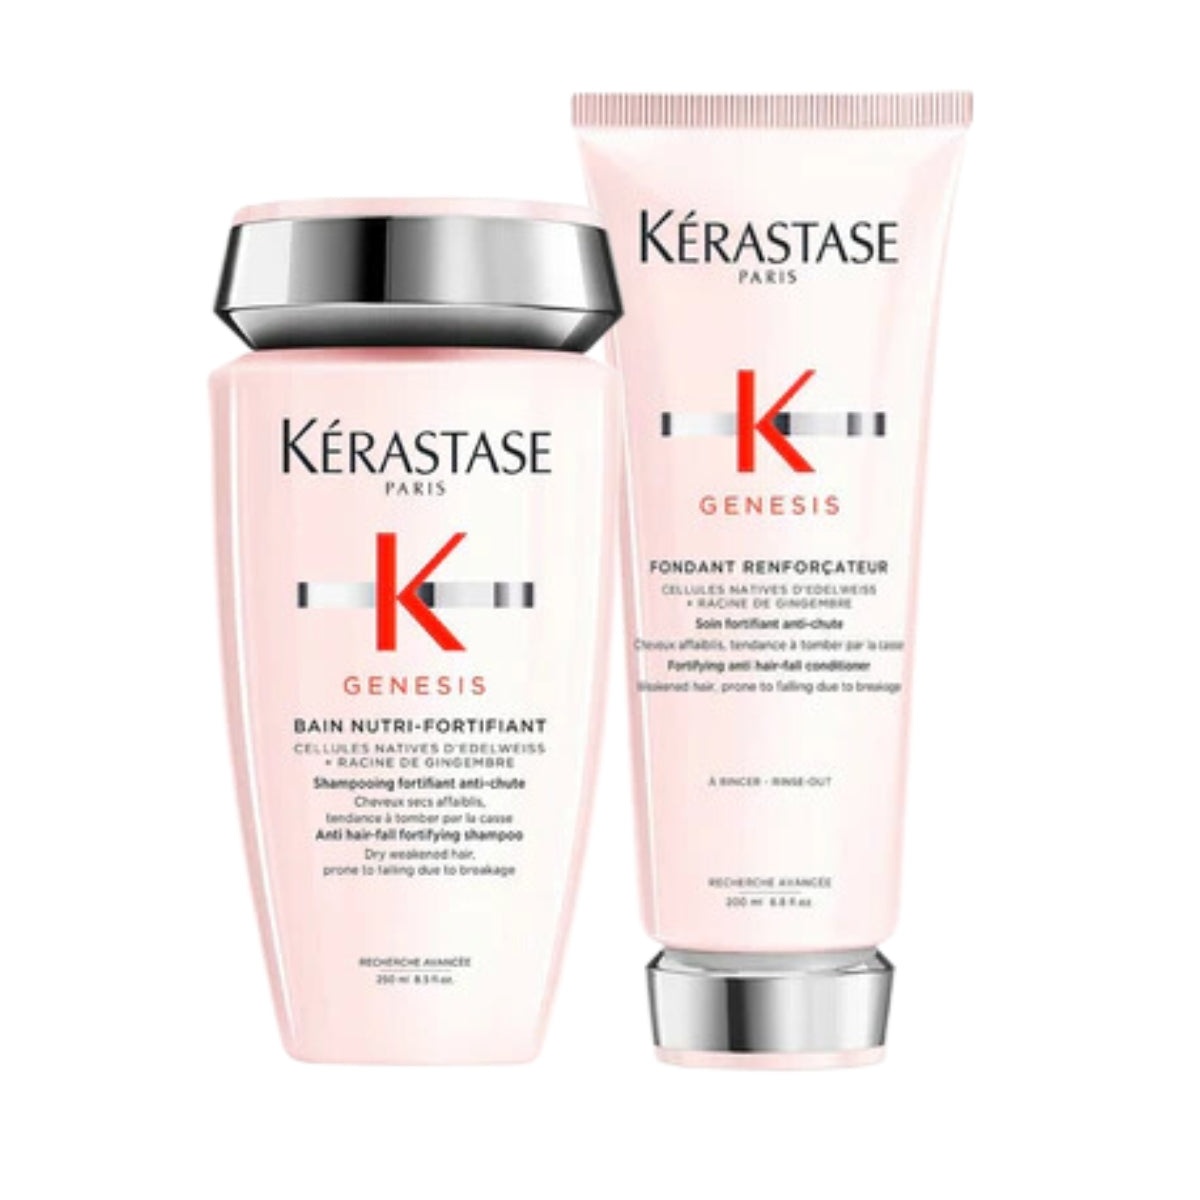 Kérastase Genesis Duo for Thick or Dry Hair SAVE 15%